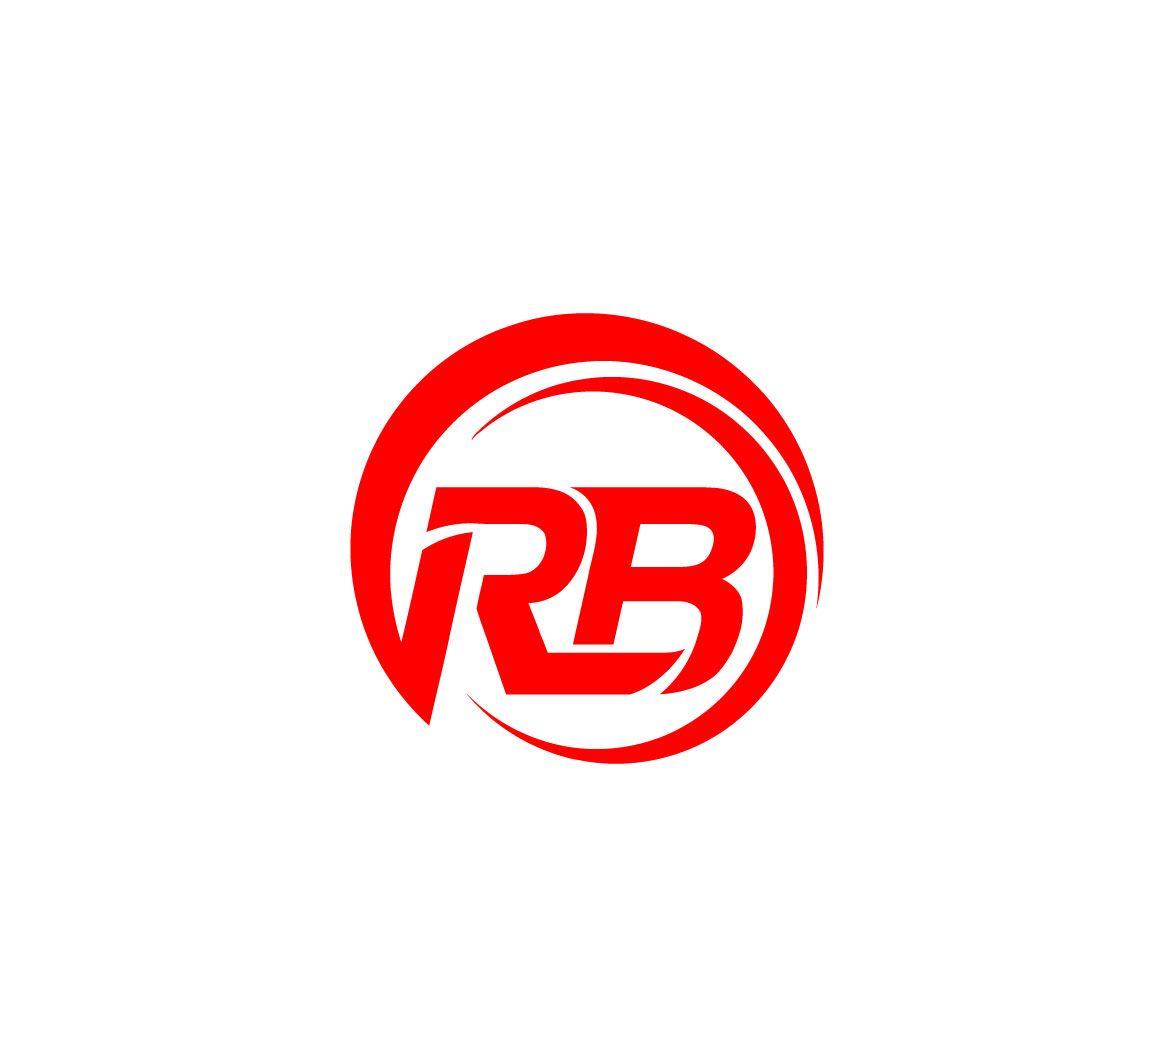 Circle R B Logo - Conservative, Modern, Fashion Logo Design for RB